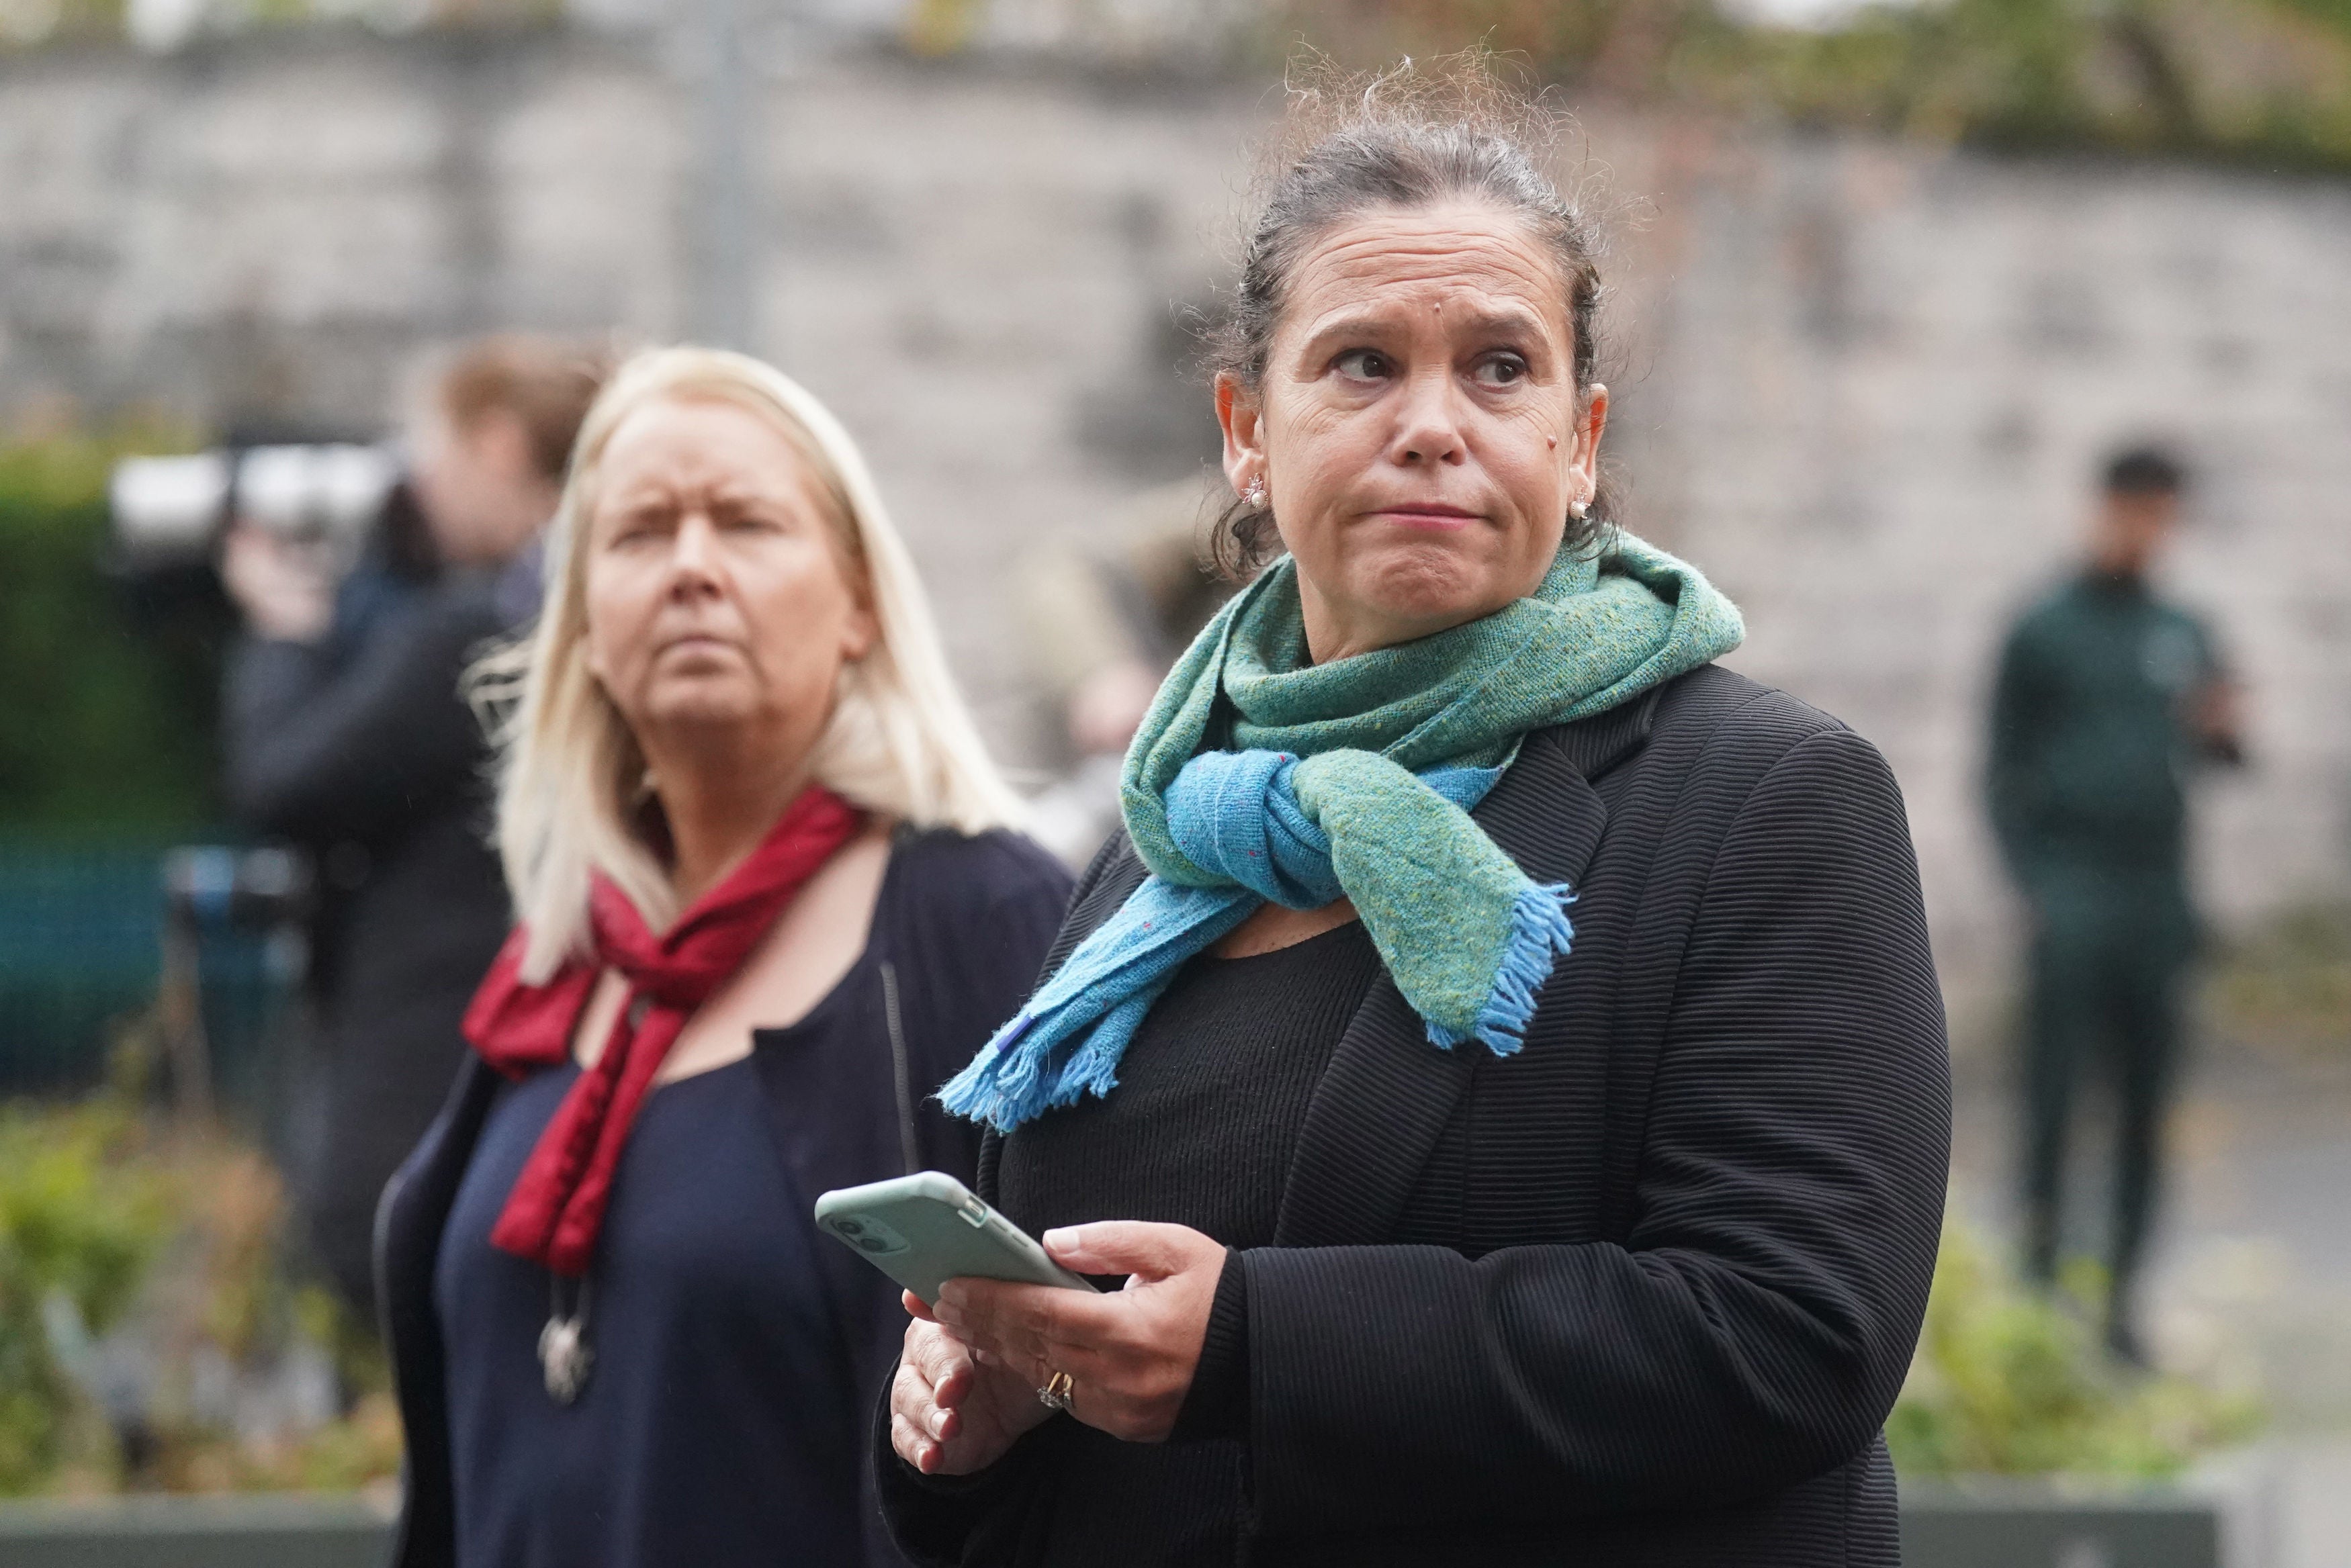 Sinn Fein president Mary-Lou McDonald said children witnessed the attack